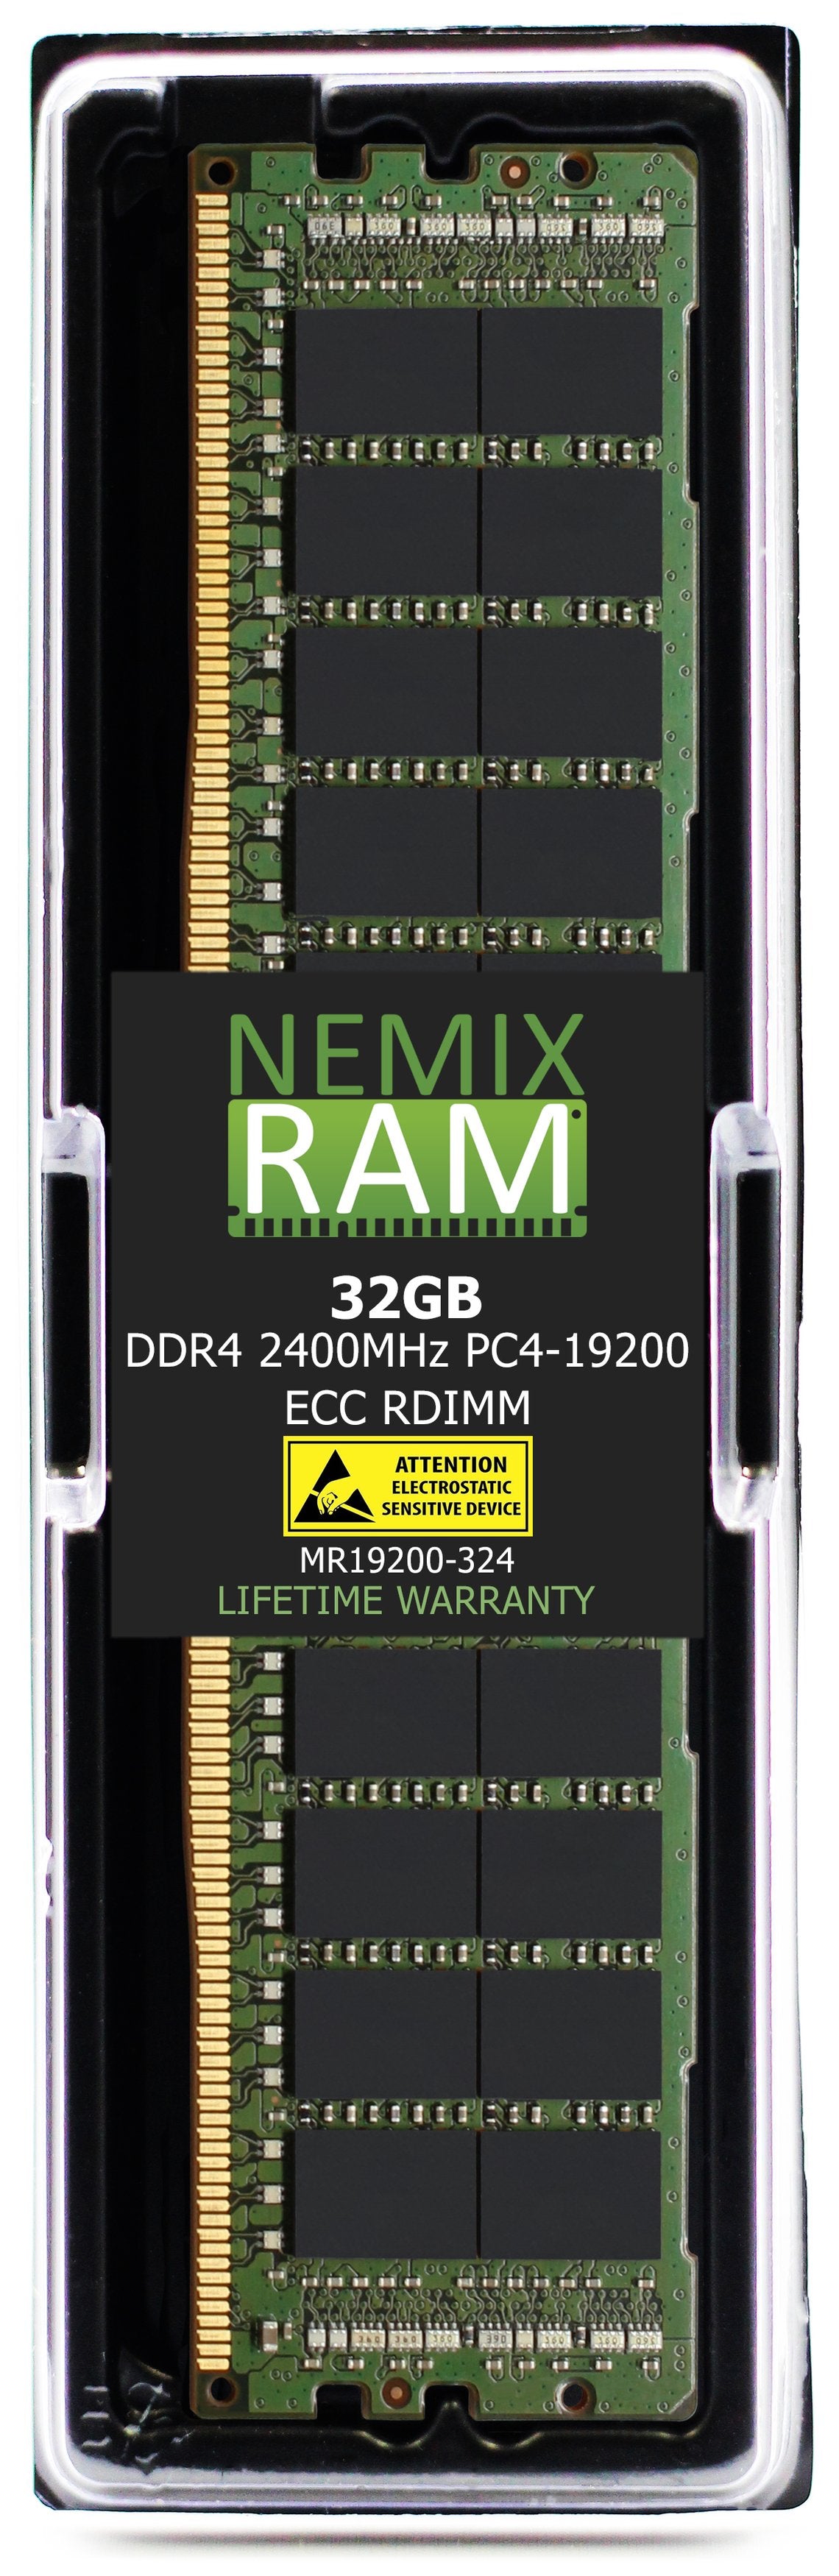 32GB DDR4 2400MHZ PC4-19200 VLP RDIMM Compatible with Supermicro MEM-DR432L-SV01-ER24